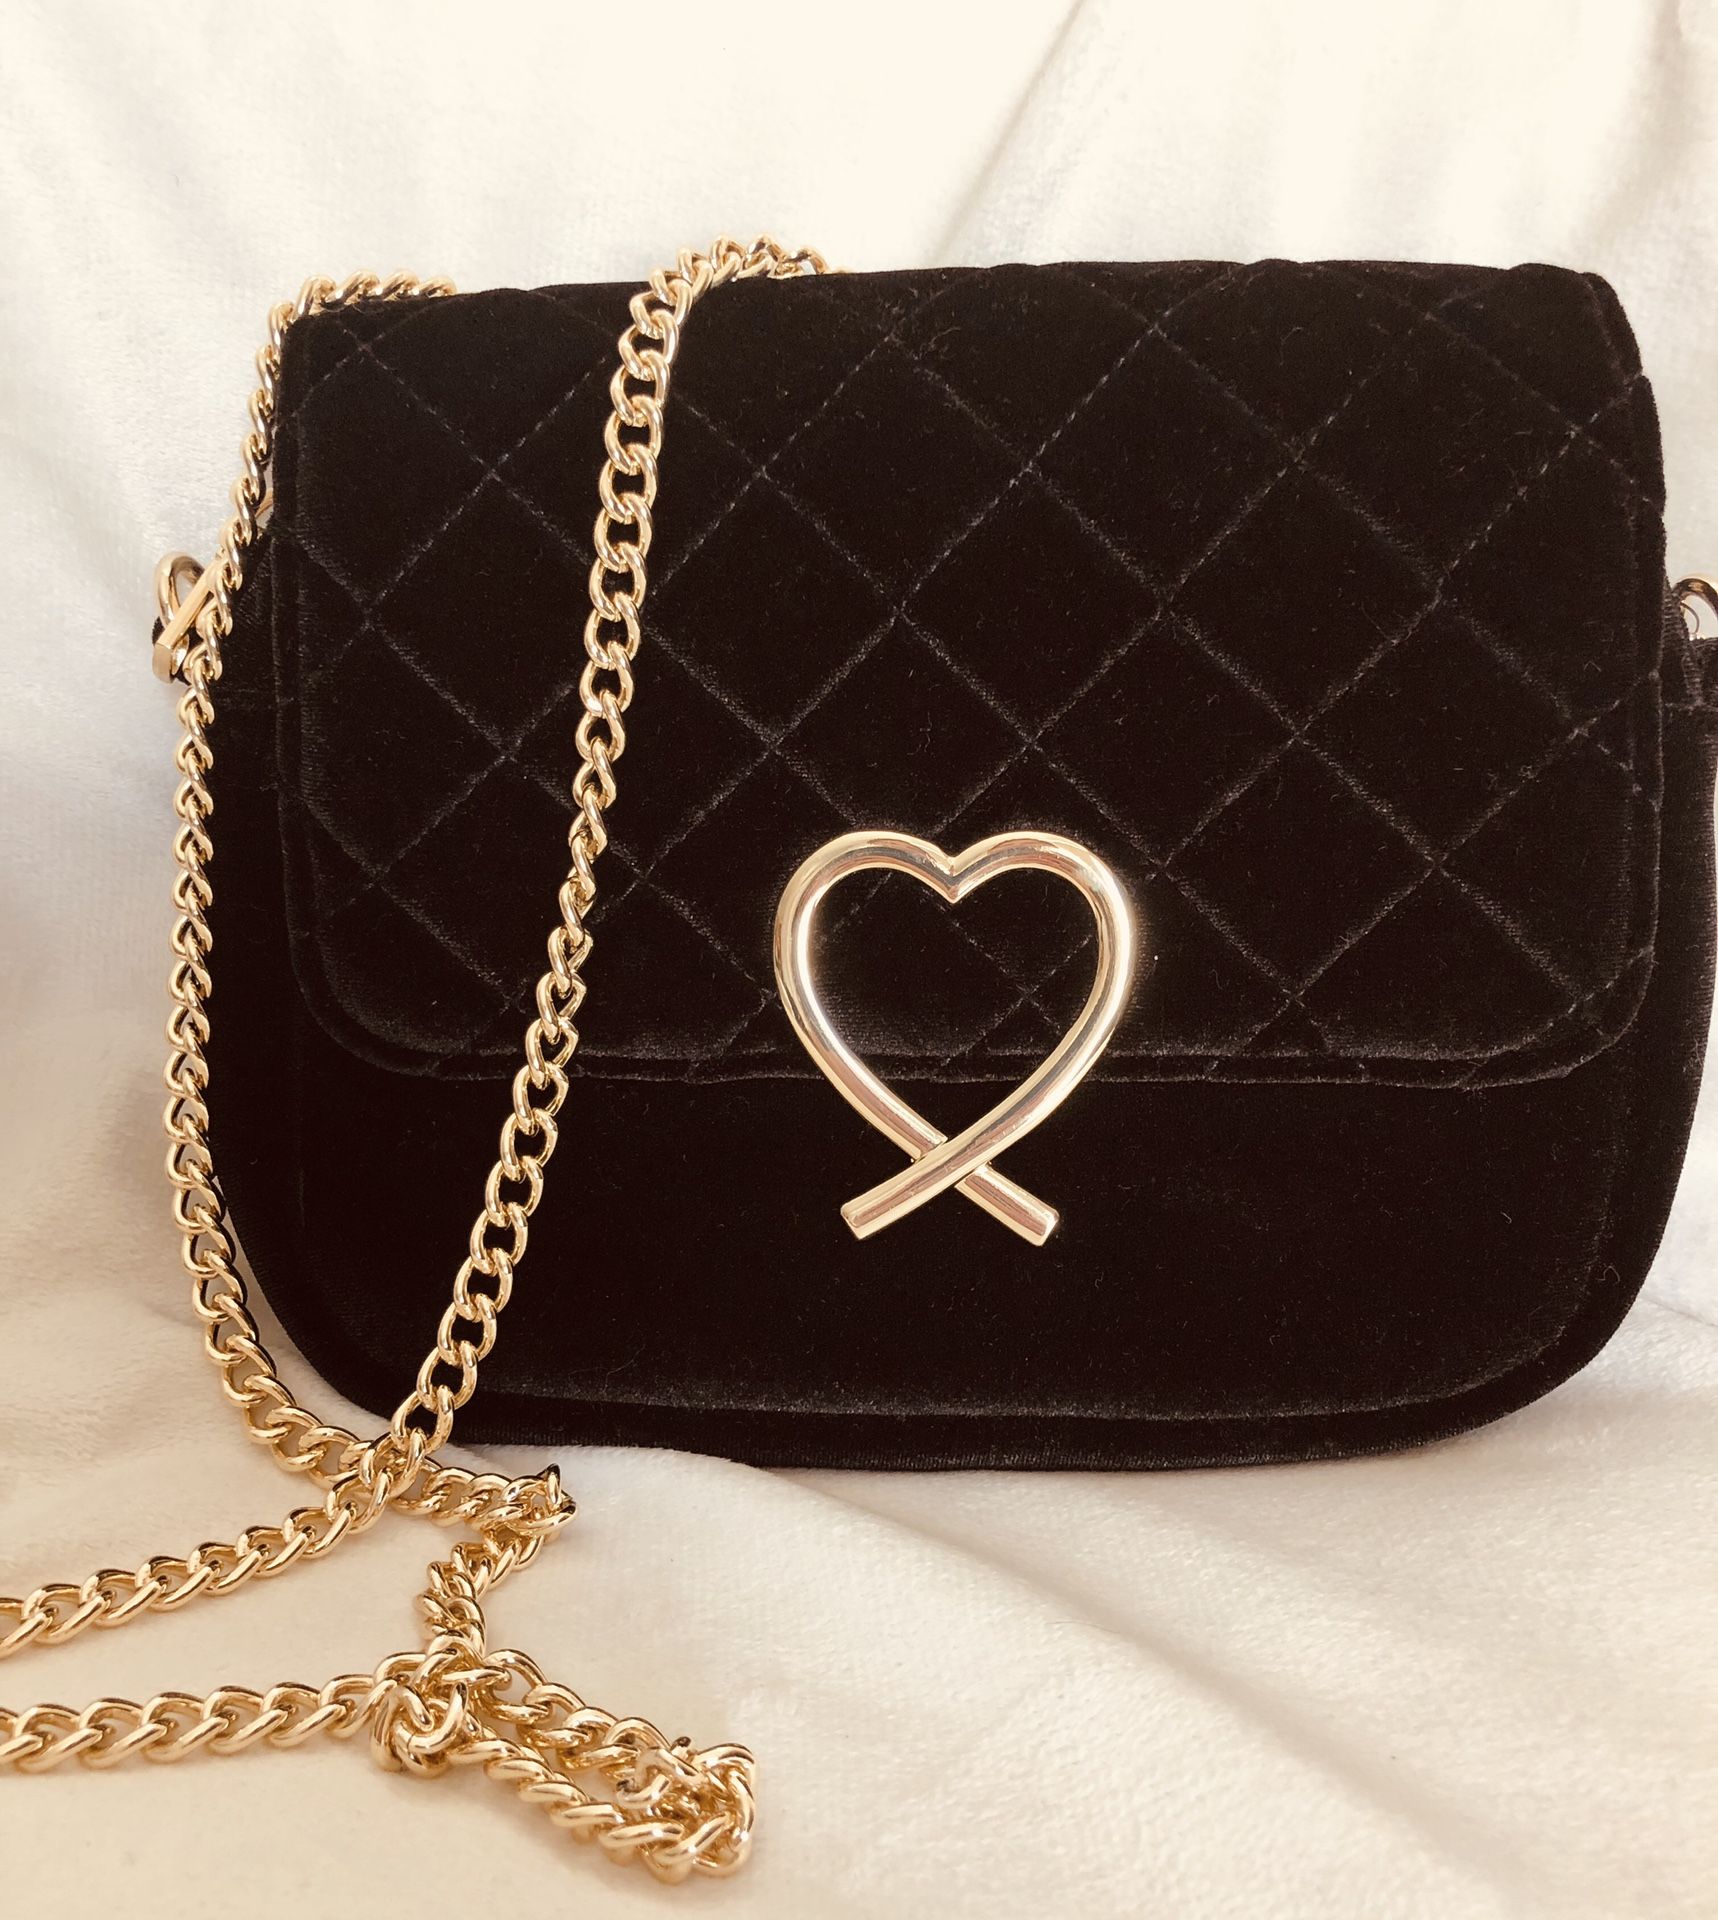 Black and Gold purse Cross body bag Brand New Velvet handbag with gold details!! Bolsa color negro con dorado Nueva sin usar de terciopelo Súper Herm